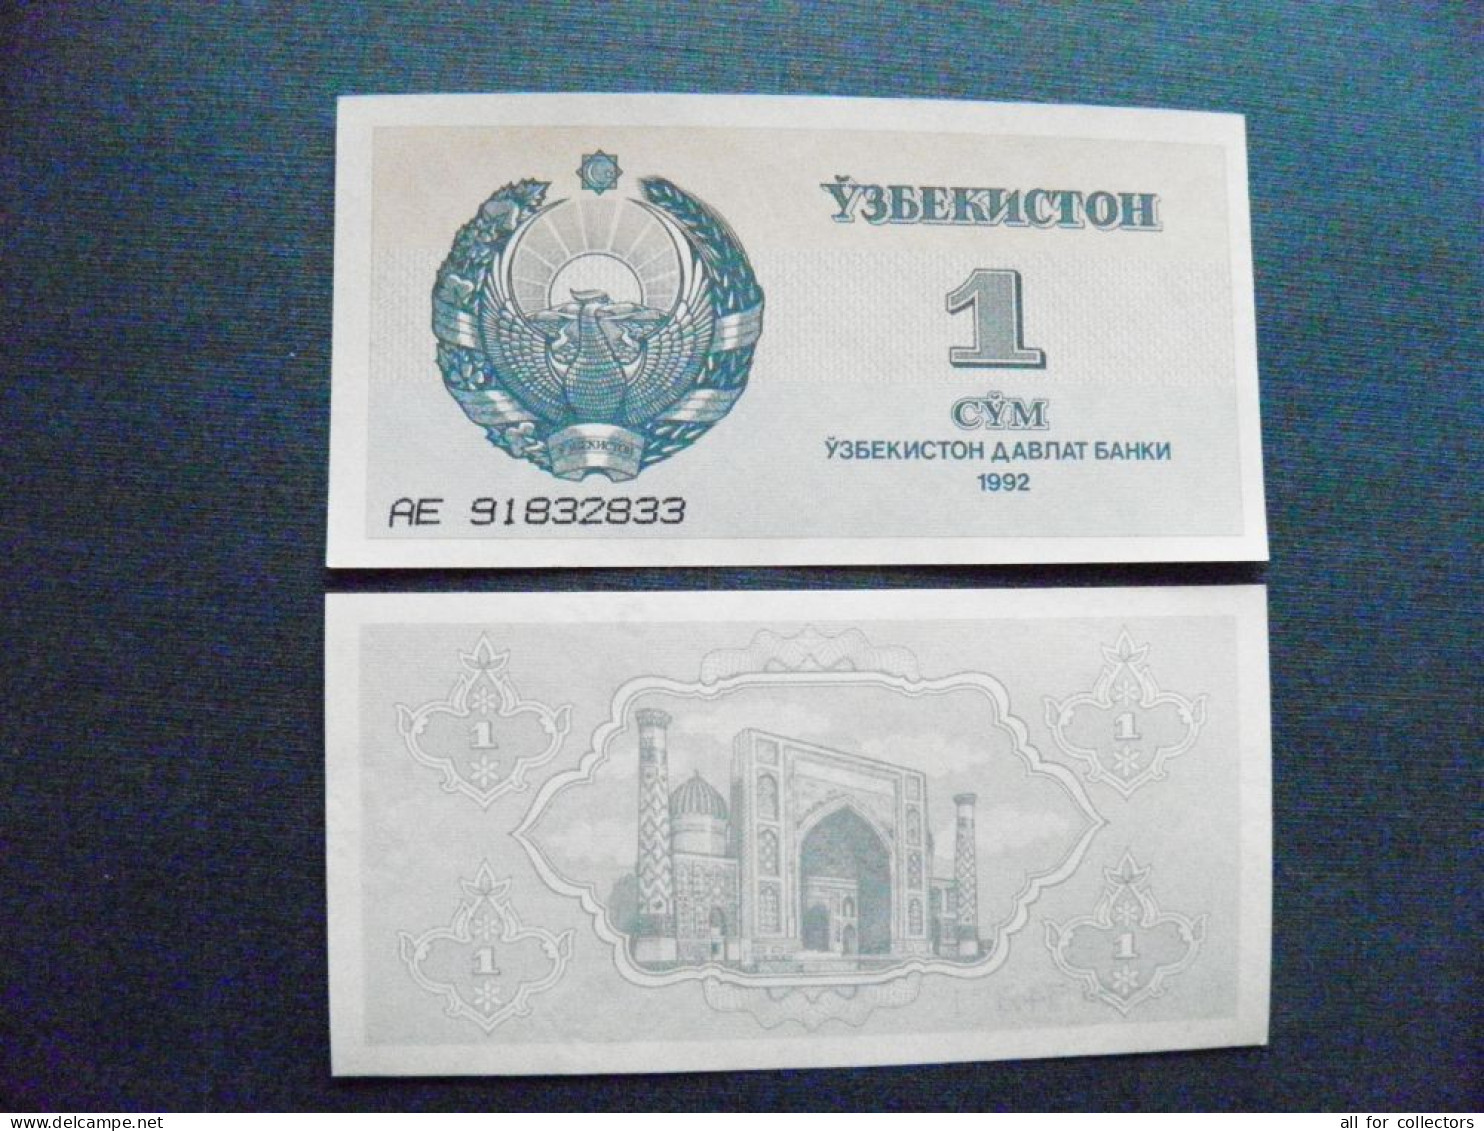 Banknote Uzbekistan Unc 1 Sum 1992 P-61 Coat Of Arms Mosque - Uzbekistan